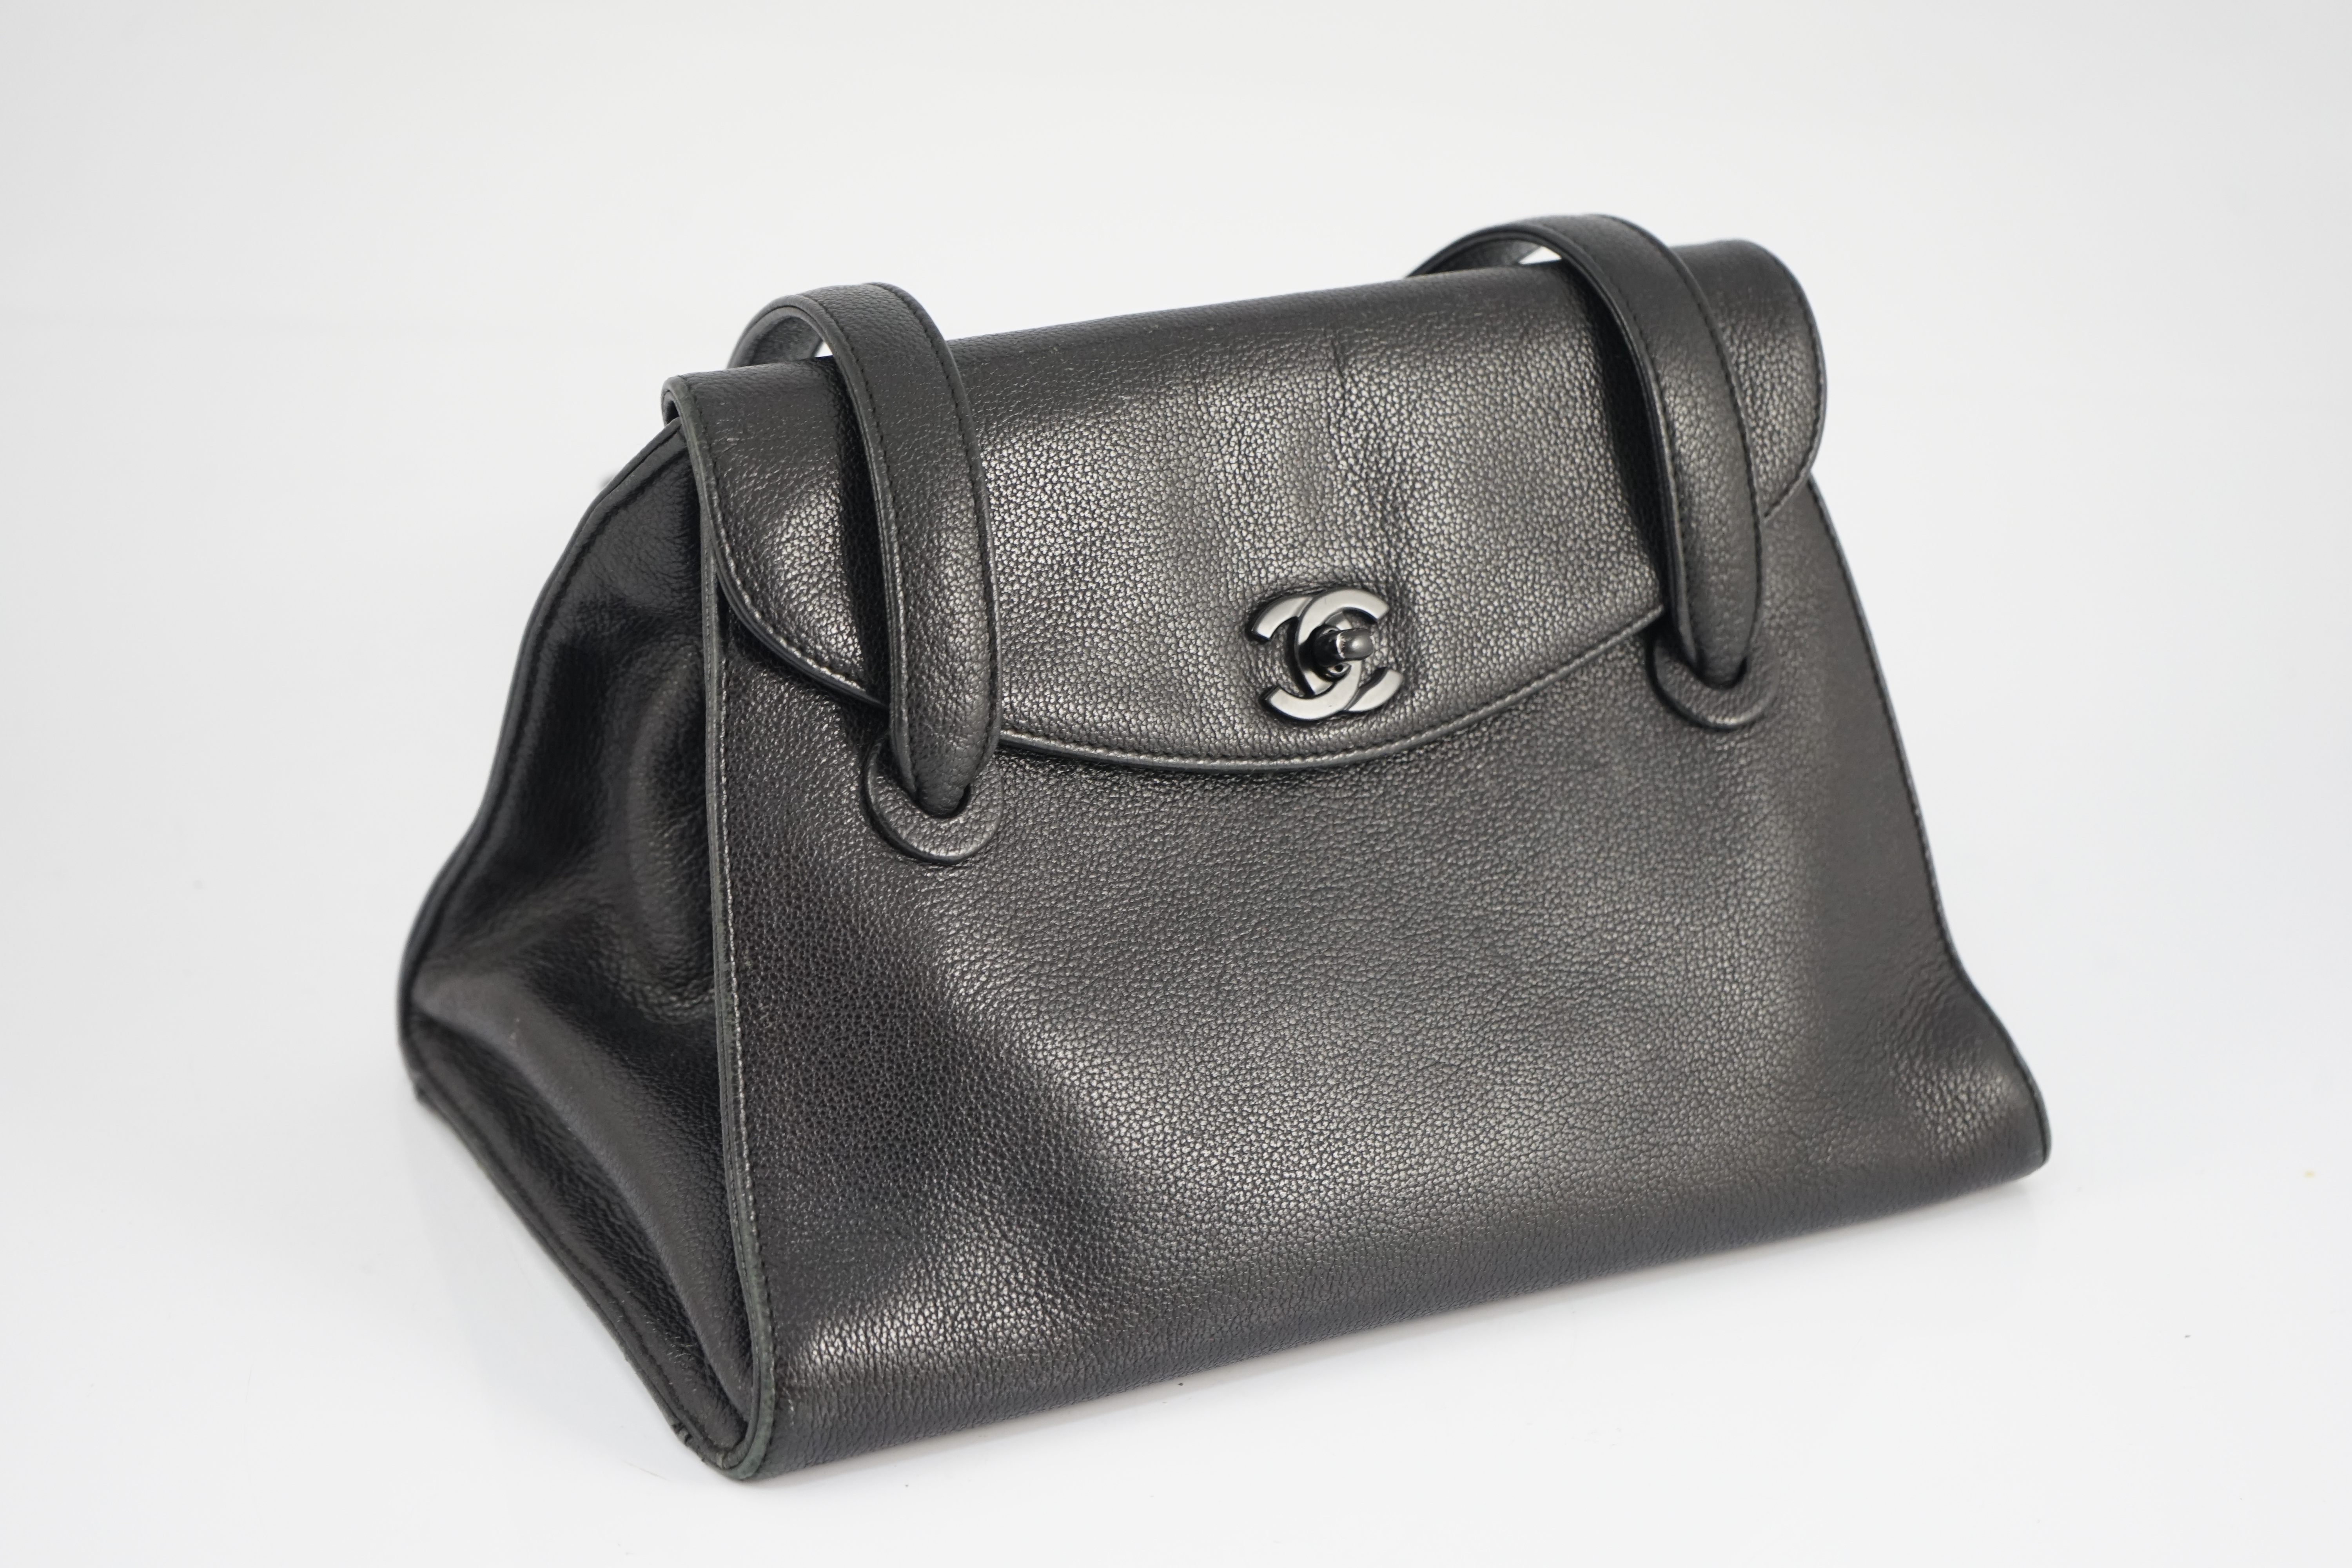 A black Chanel CC shoulder bag width 28cm, depth 17.5cm, length 19cm